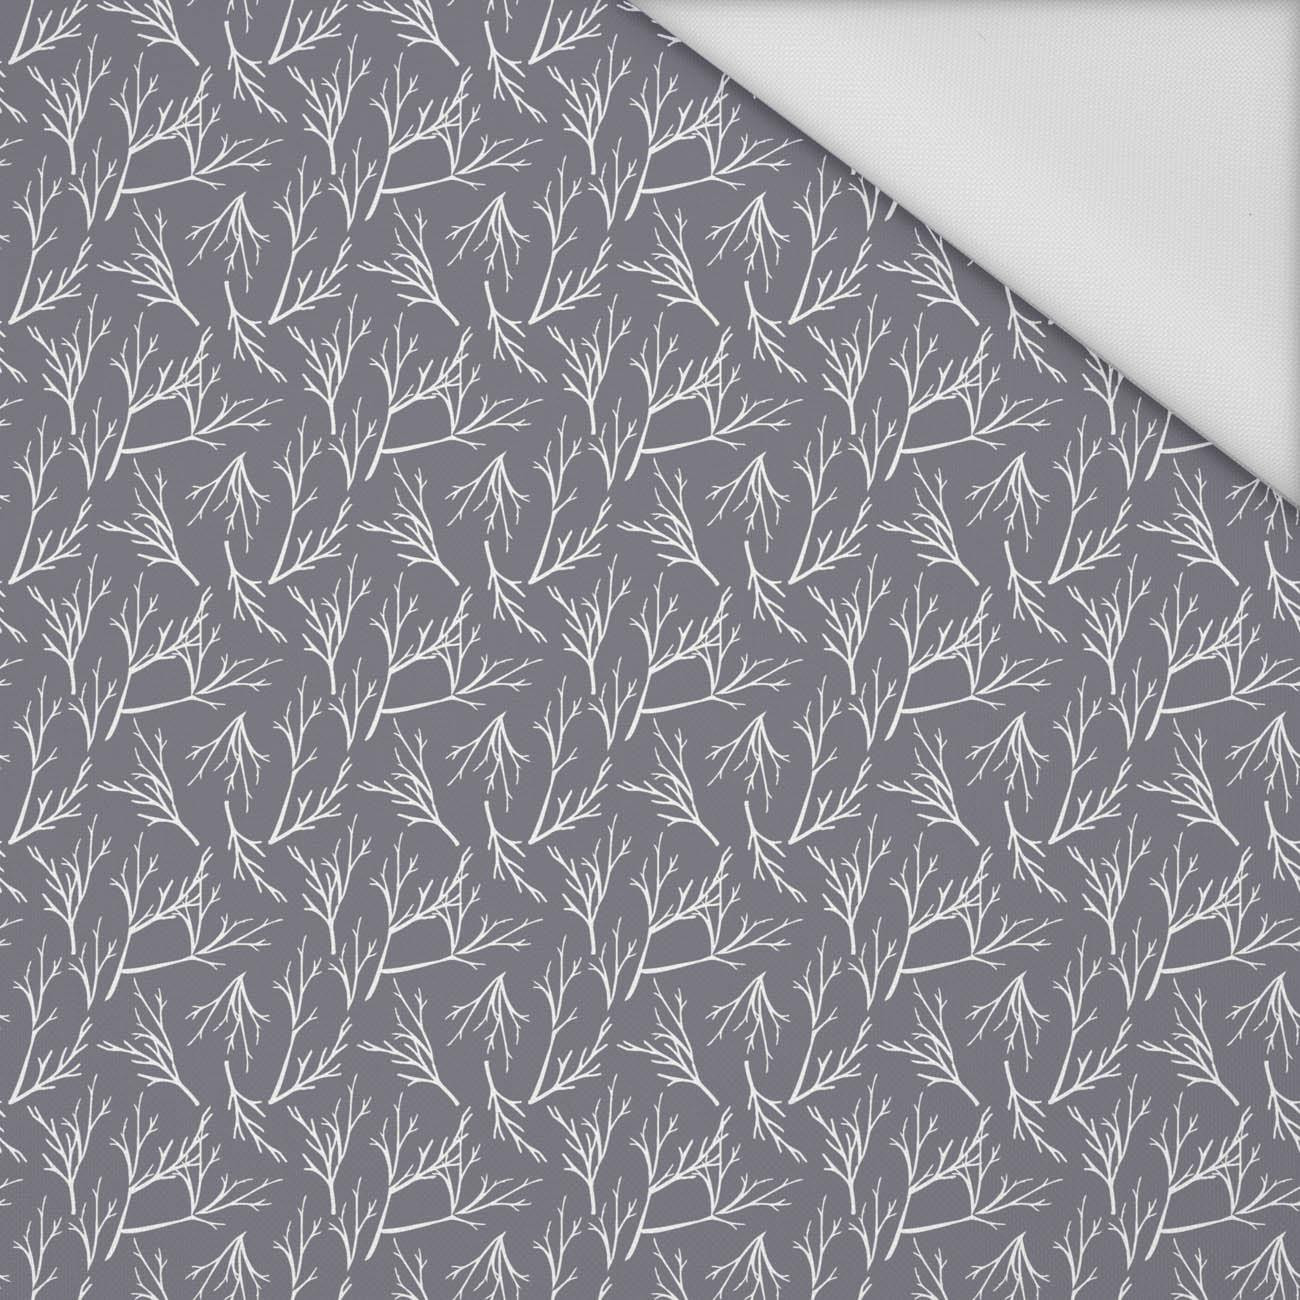 TWIGS pat. 2 (WINTER TIME) / grey - Waterproof woven fabric